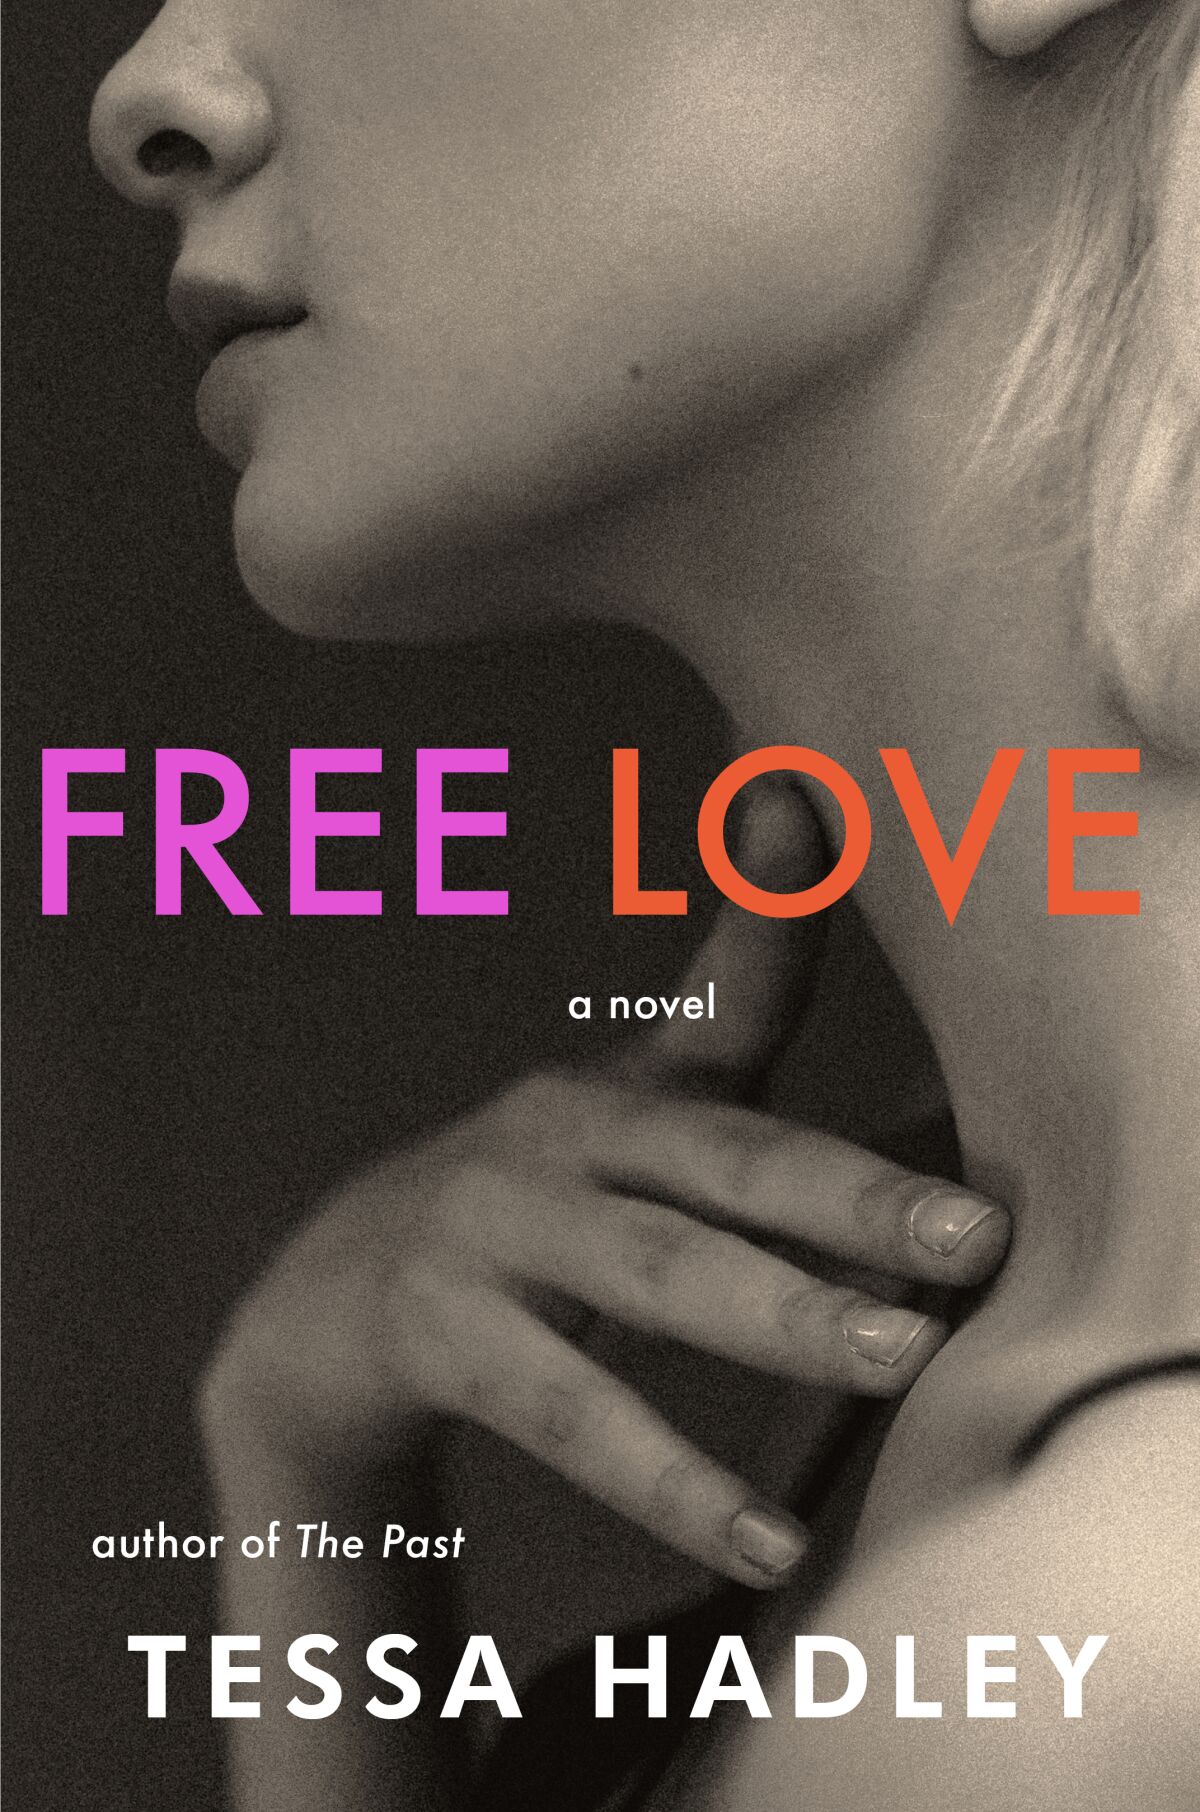 "Free Love," by Tessa Hadley